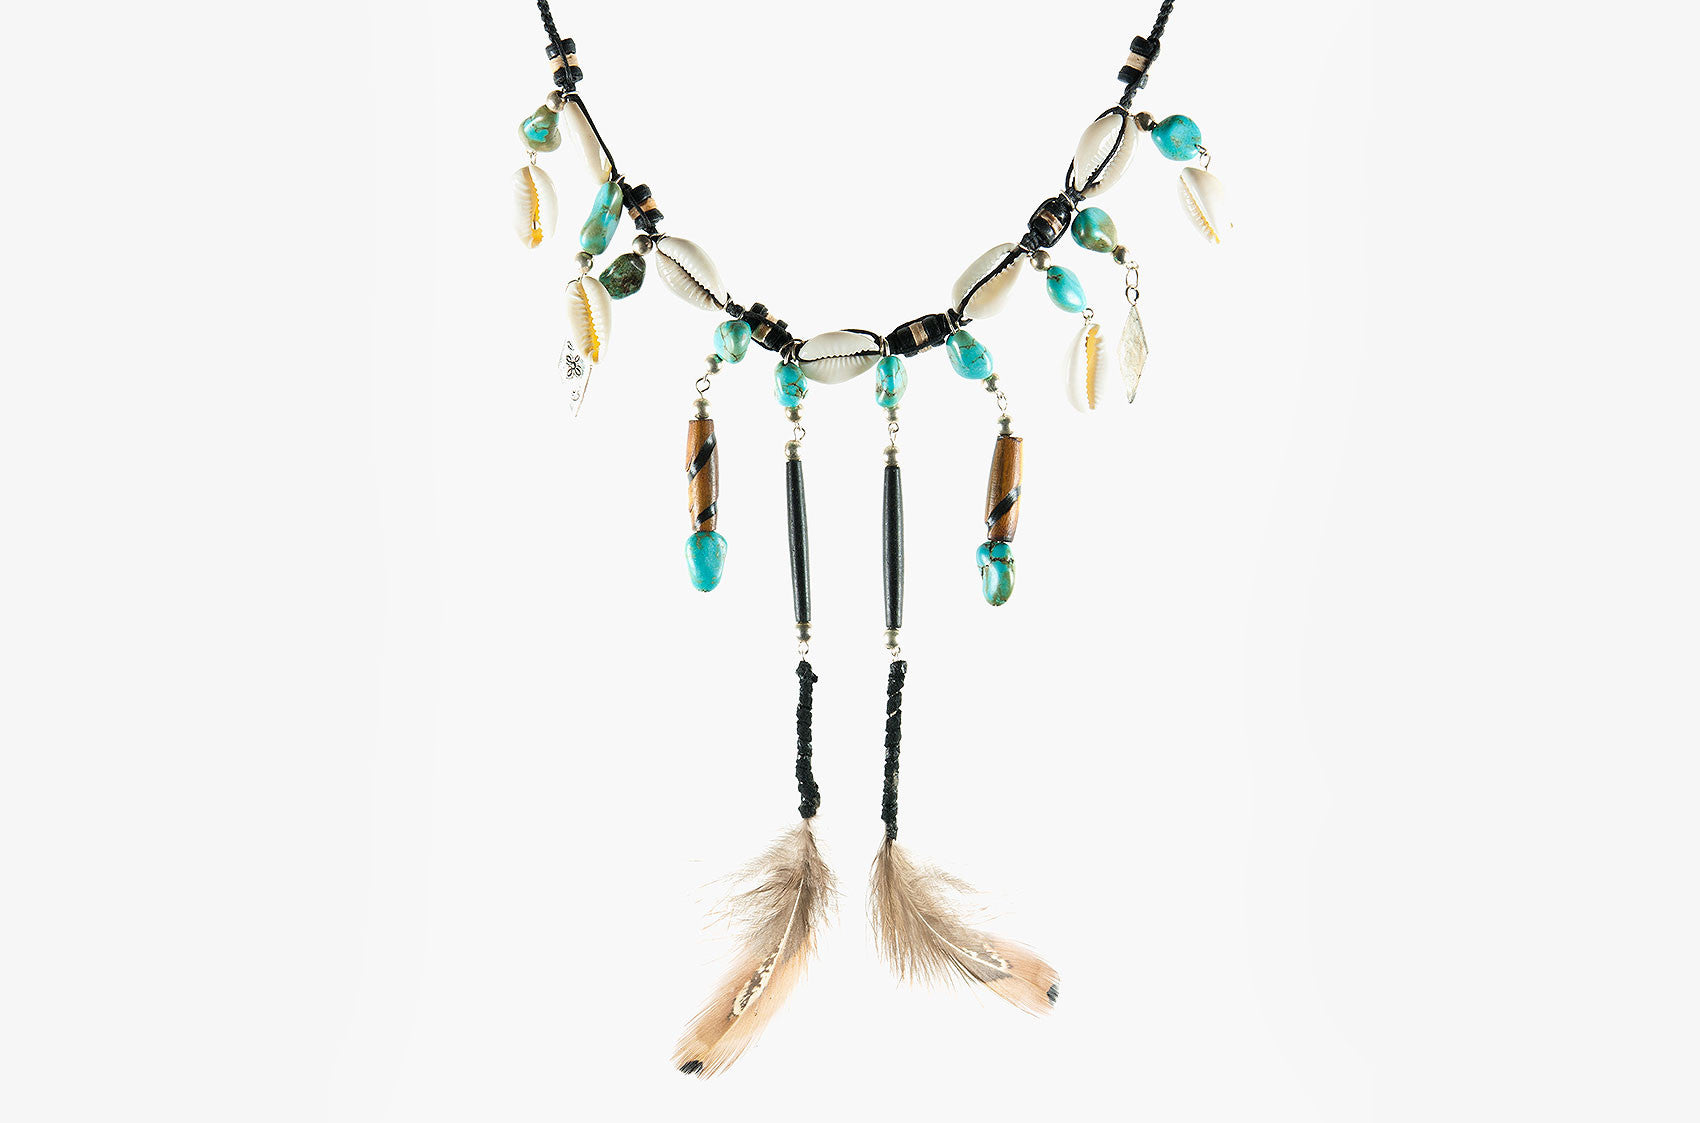 Buffalo Girl Sky Dancer necklace